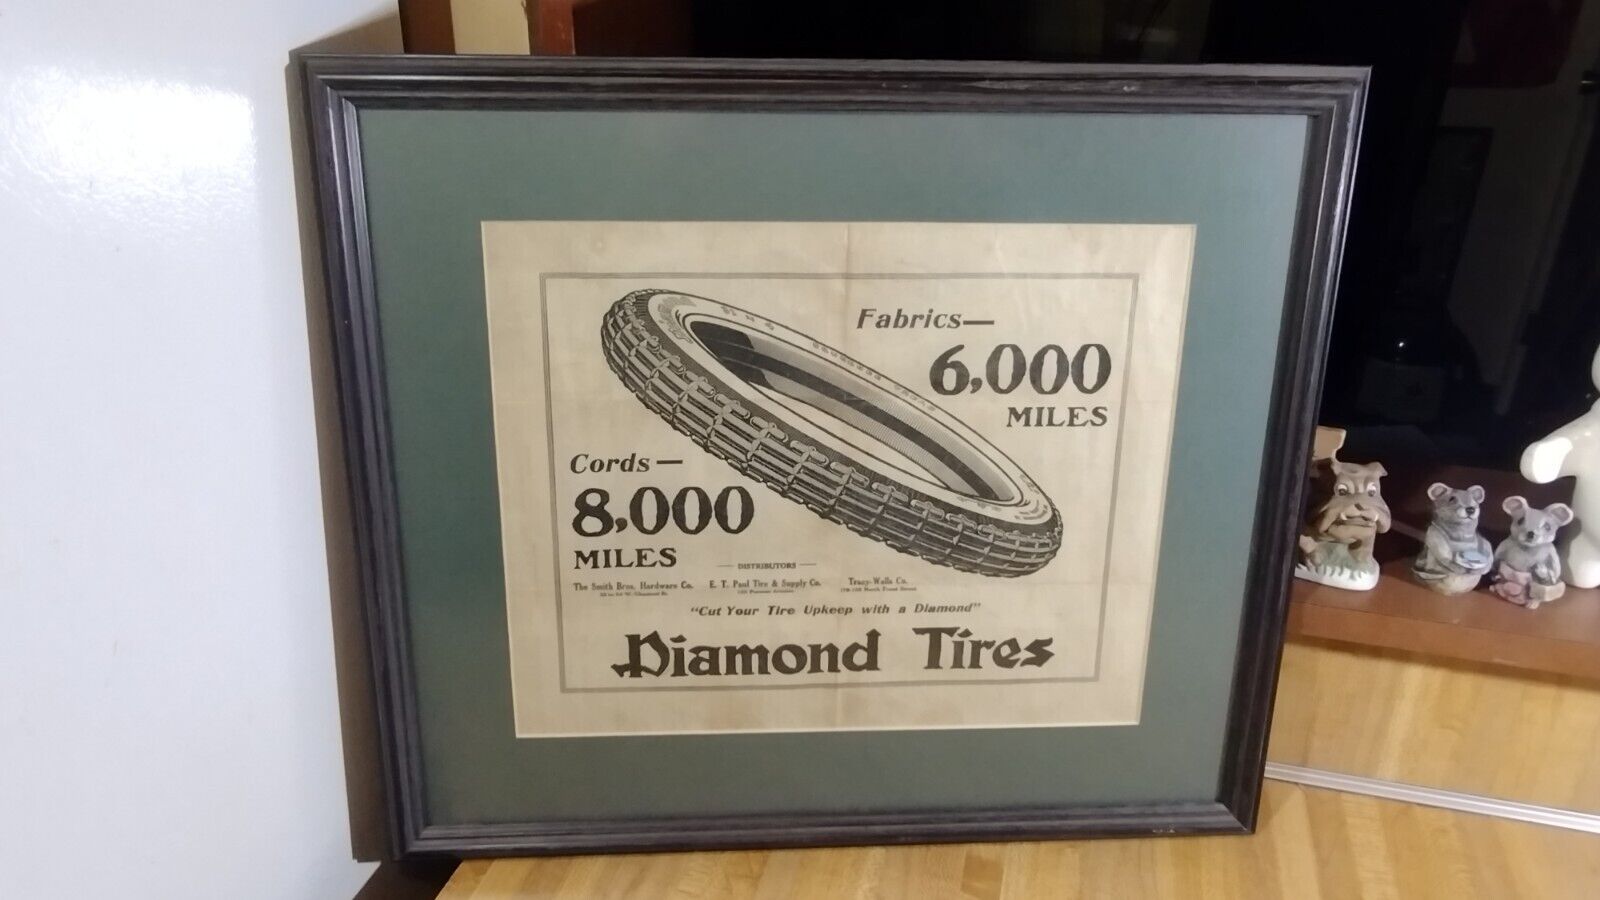 Diamond Tires Framed Ad,Fabrics-6,000 miles,Cords-8,000 miles